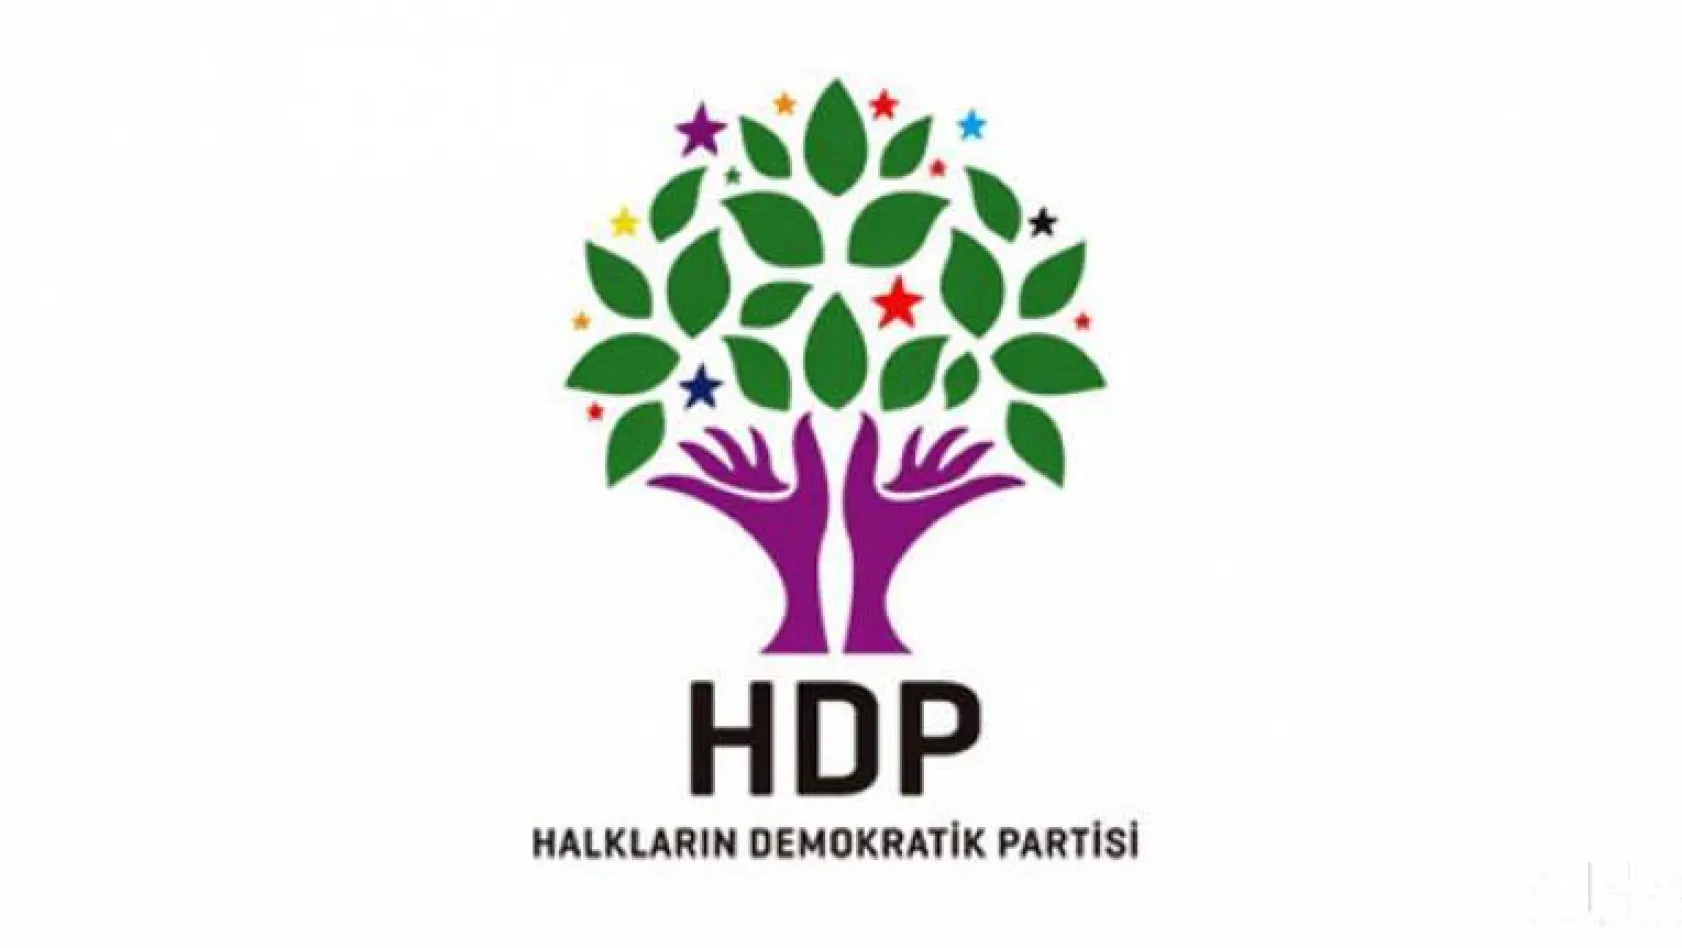 HDP'ye formül bulundu